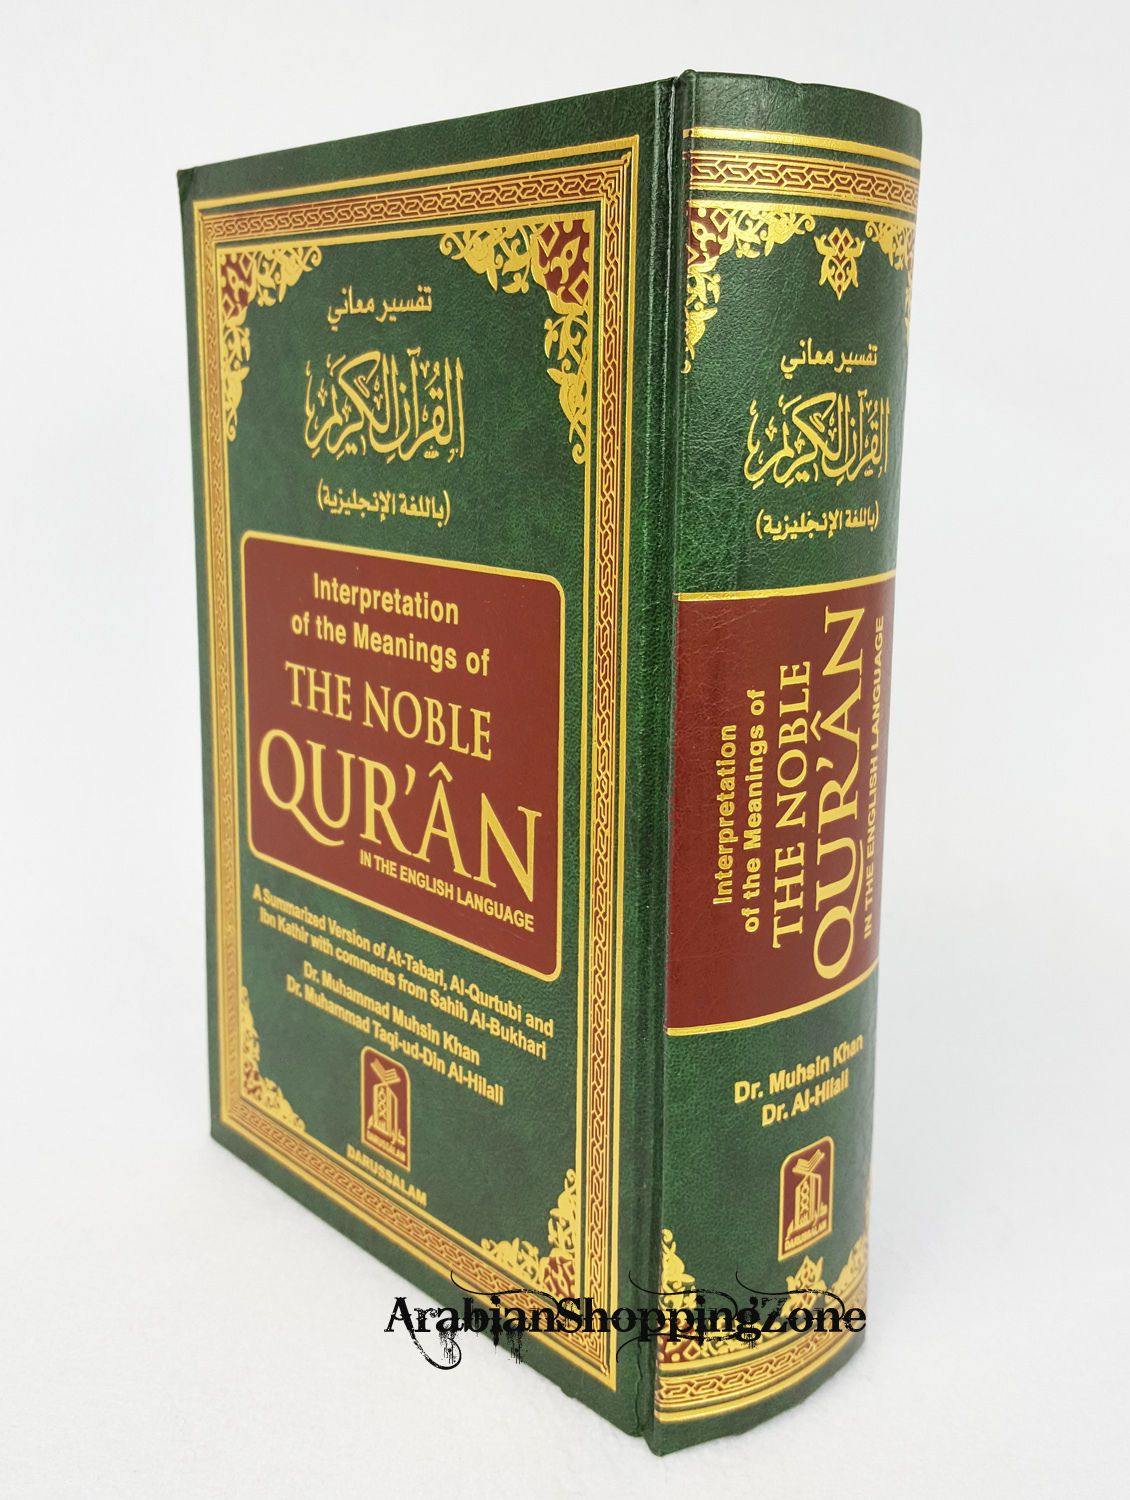 Noble Quran Arabic / English Translation from Madinah (Saudi-Arabia) - Arabian Shopping Zone